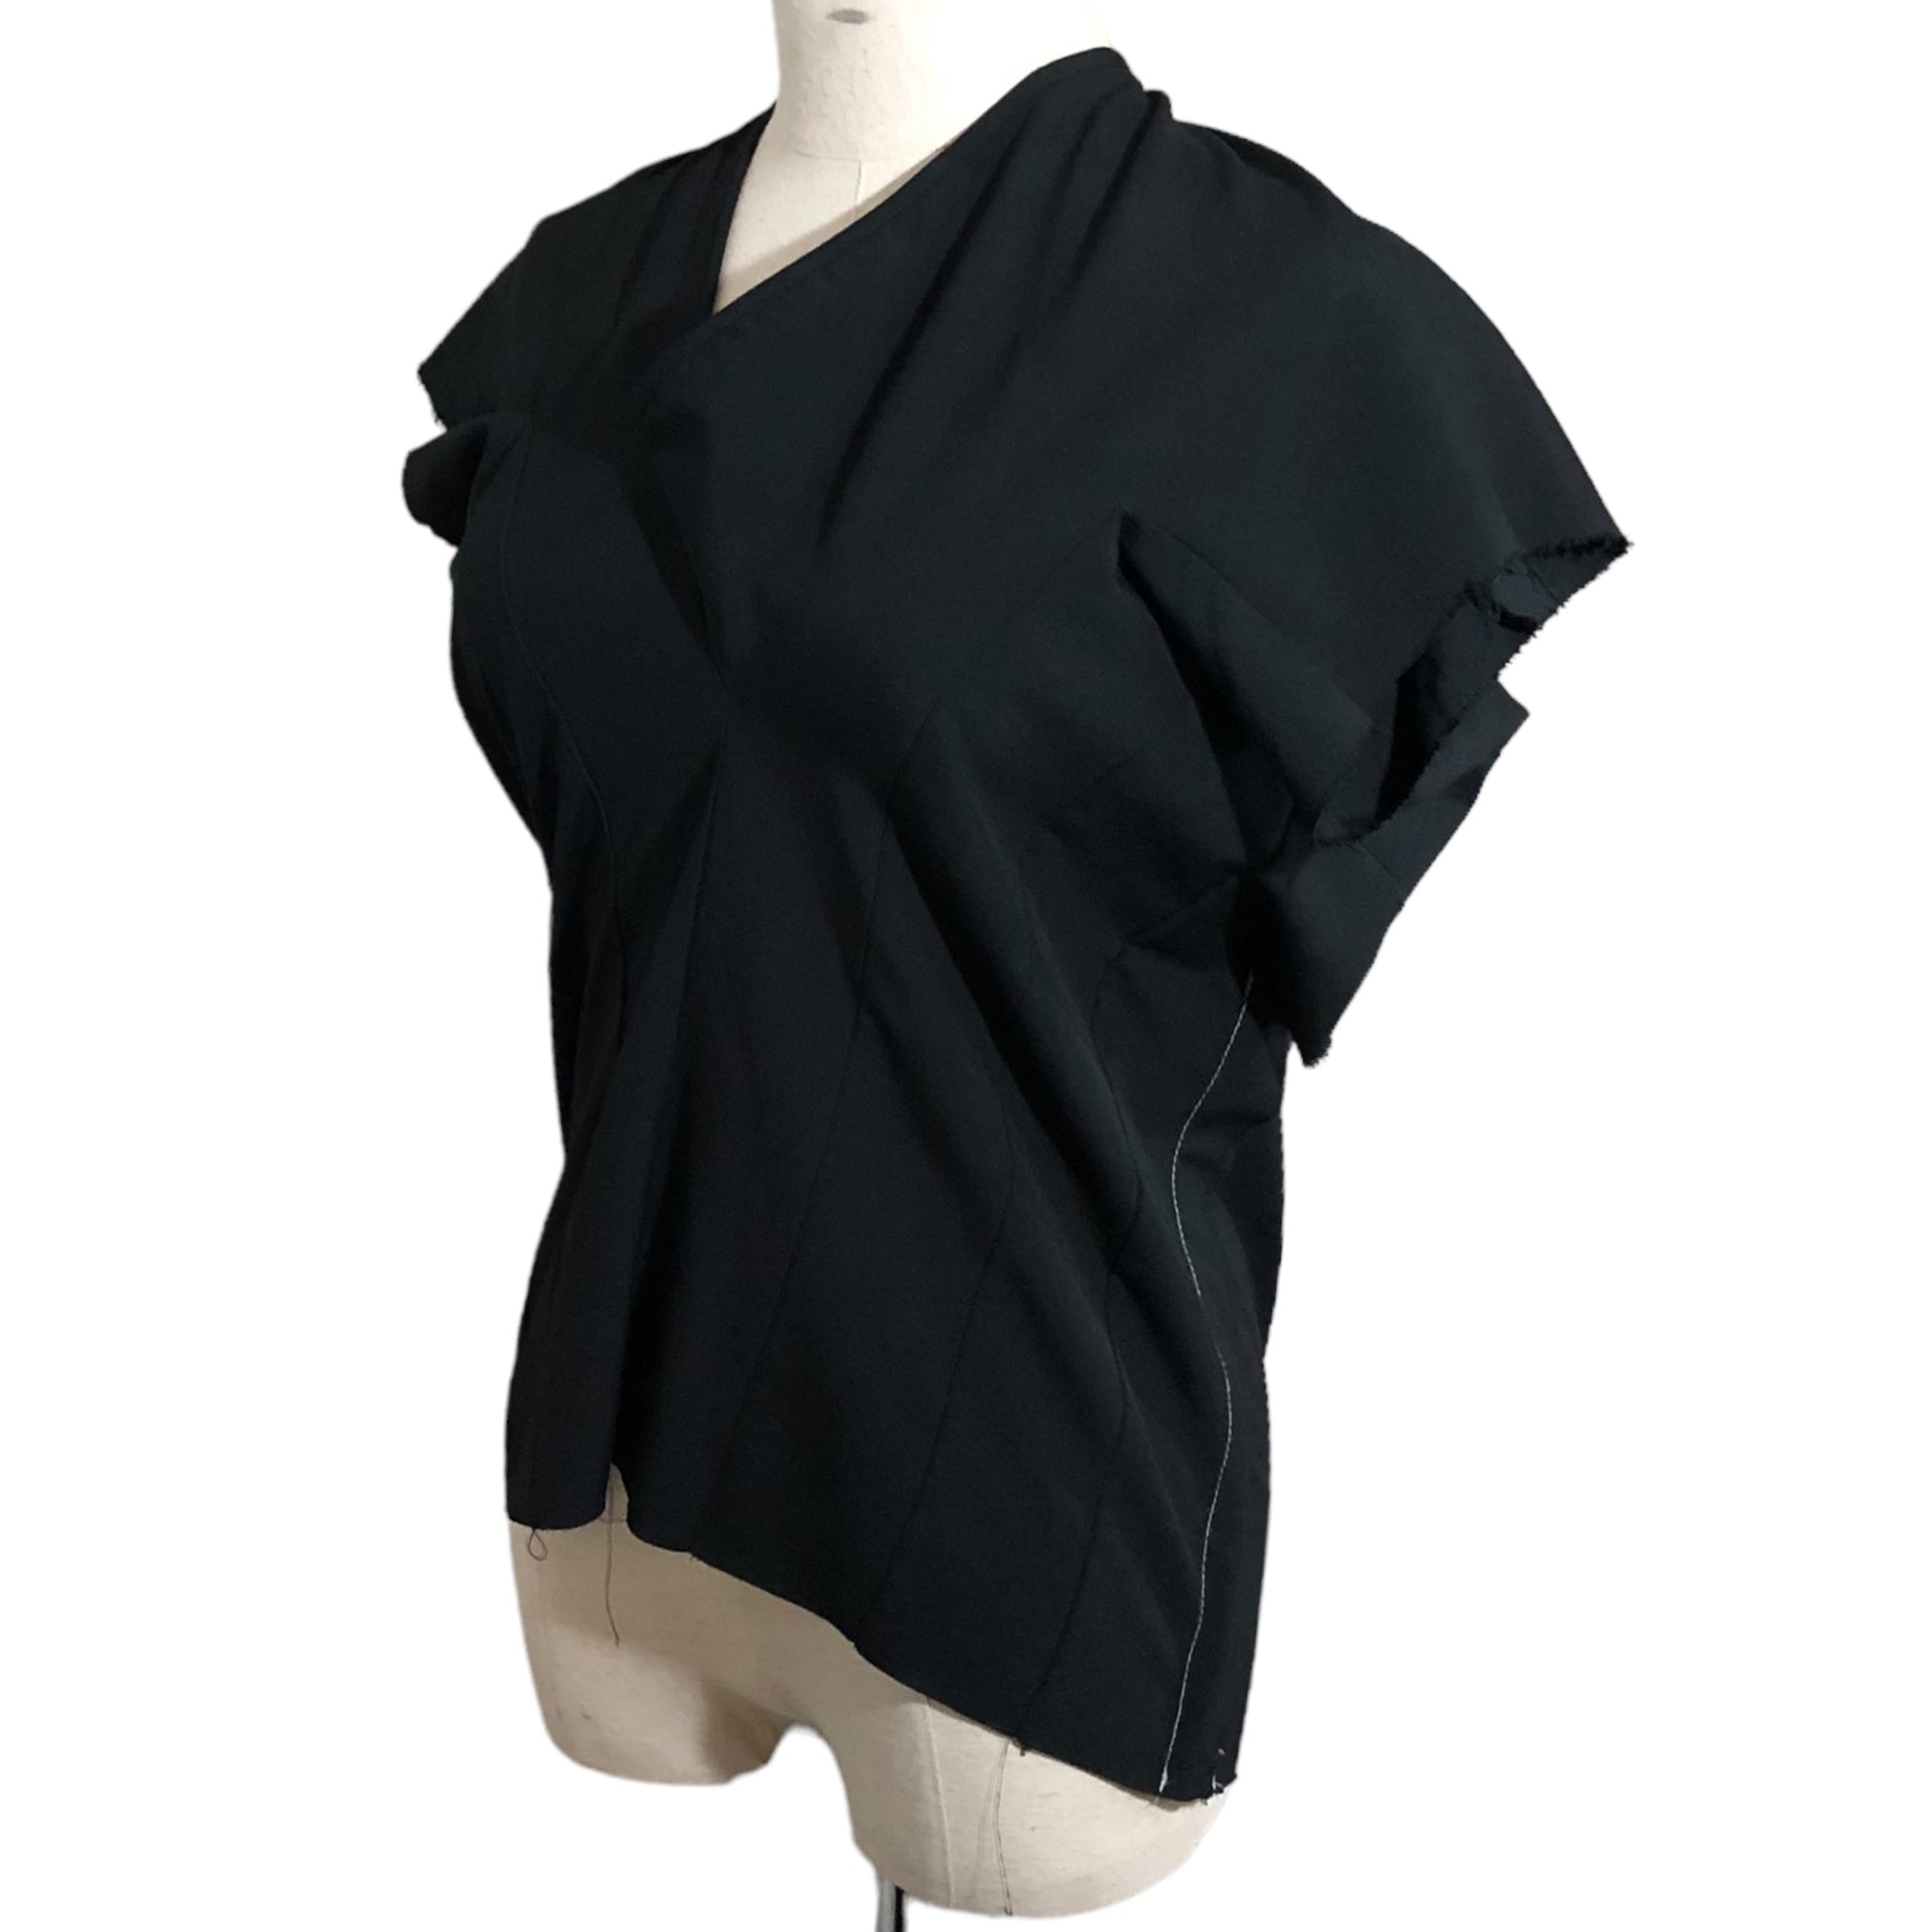 COMME des GARCONS(コムデギャルソン) 90's A blouse that expresses a twist 捻じれを表現したブラウス 90年代 GB-100340 FREE ブラック AD1997 サイドジップ 稀少アイテム